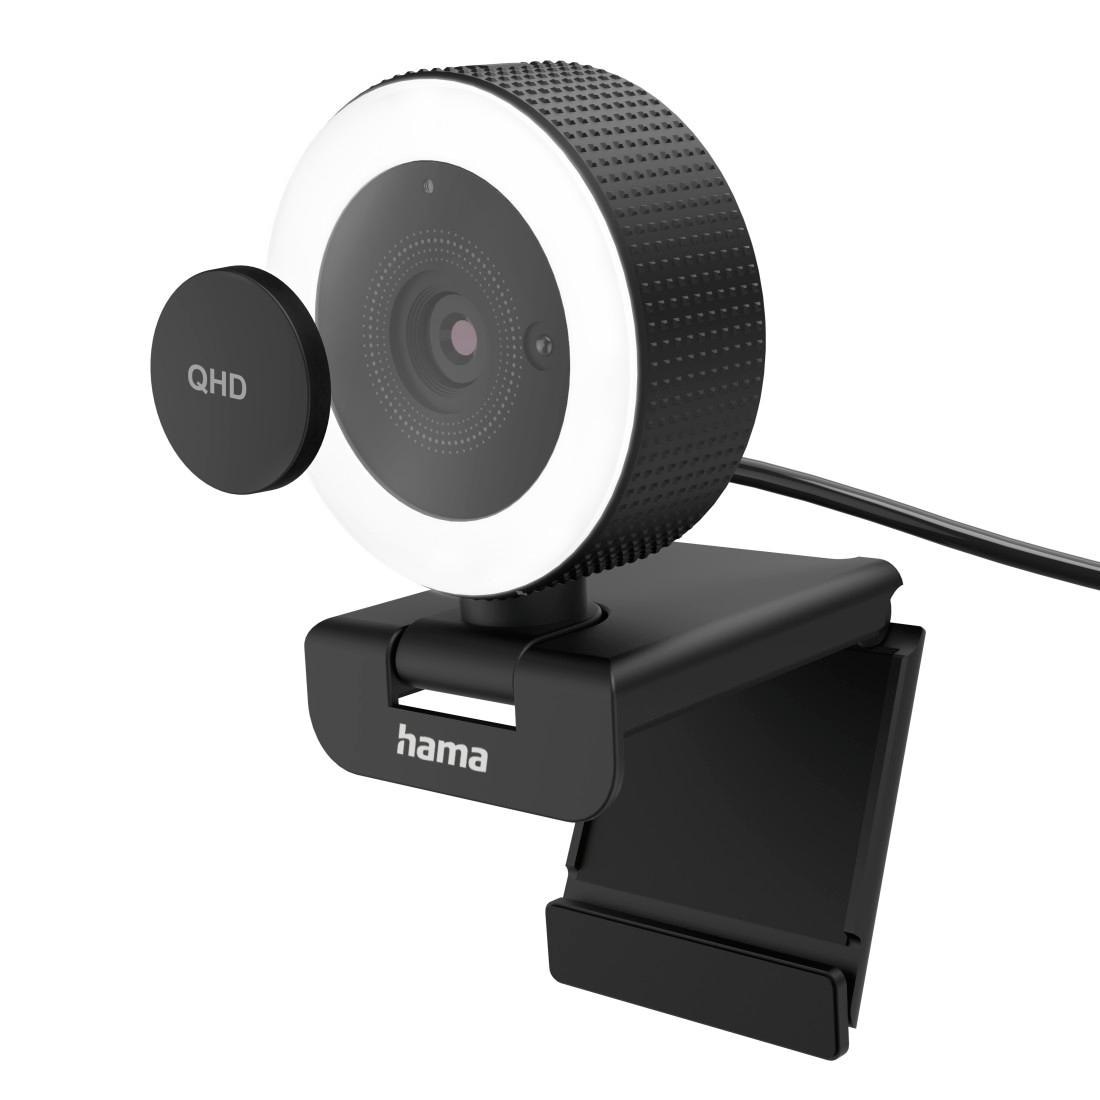 HAMA Webcam "Webcam mit Mikrofon, QHD, Licht (PC-Kamera USB, 2560p, Fernbedienung)" Camcorder schwarz Webcams